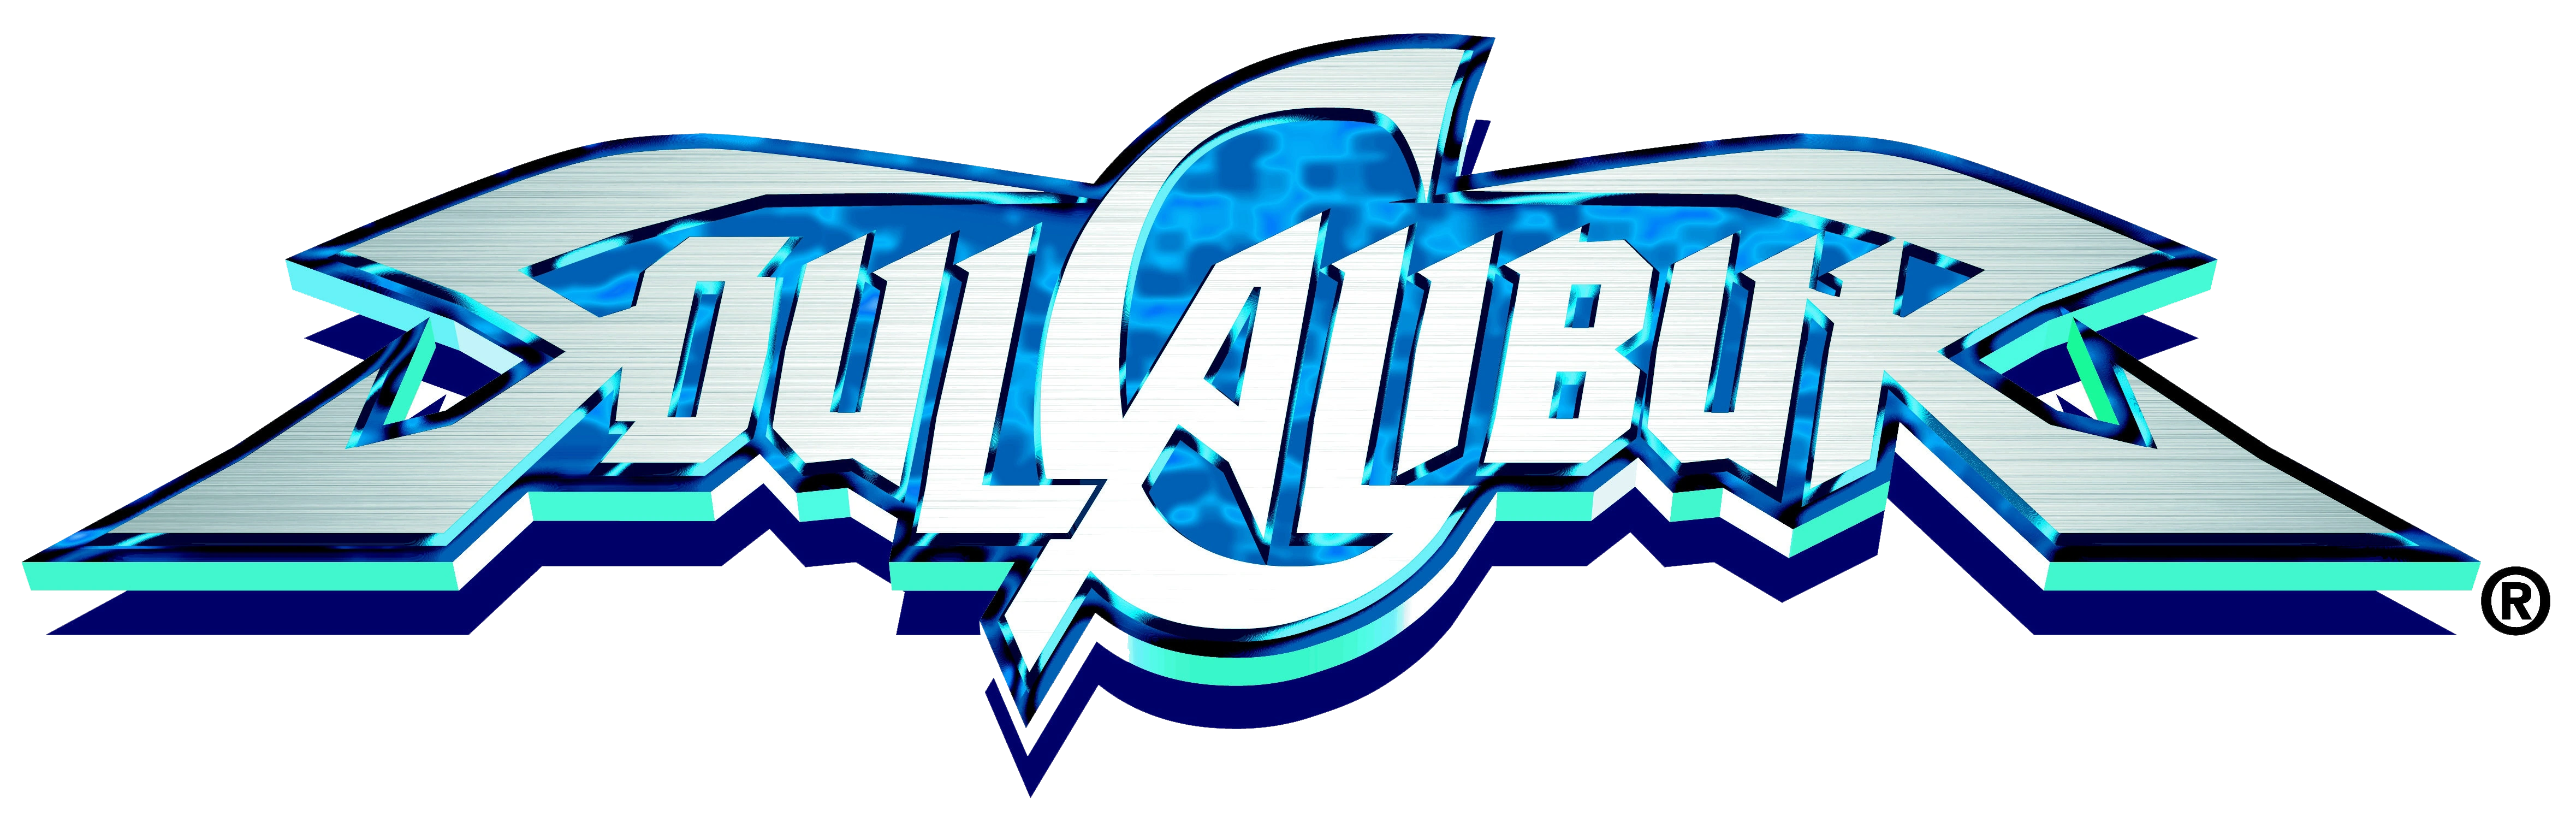 Soulcalibur series Quiz (20 Soulcalibur Trivia questions and answers)